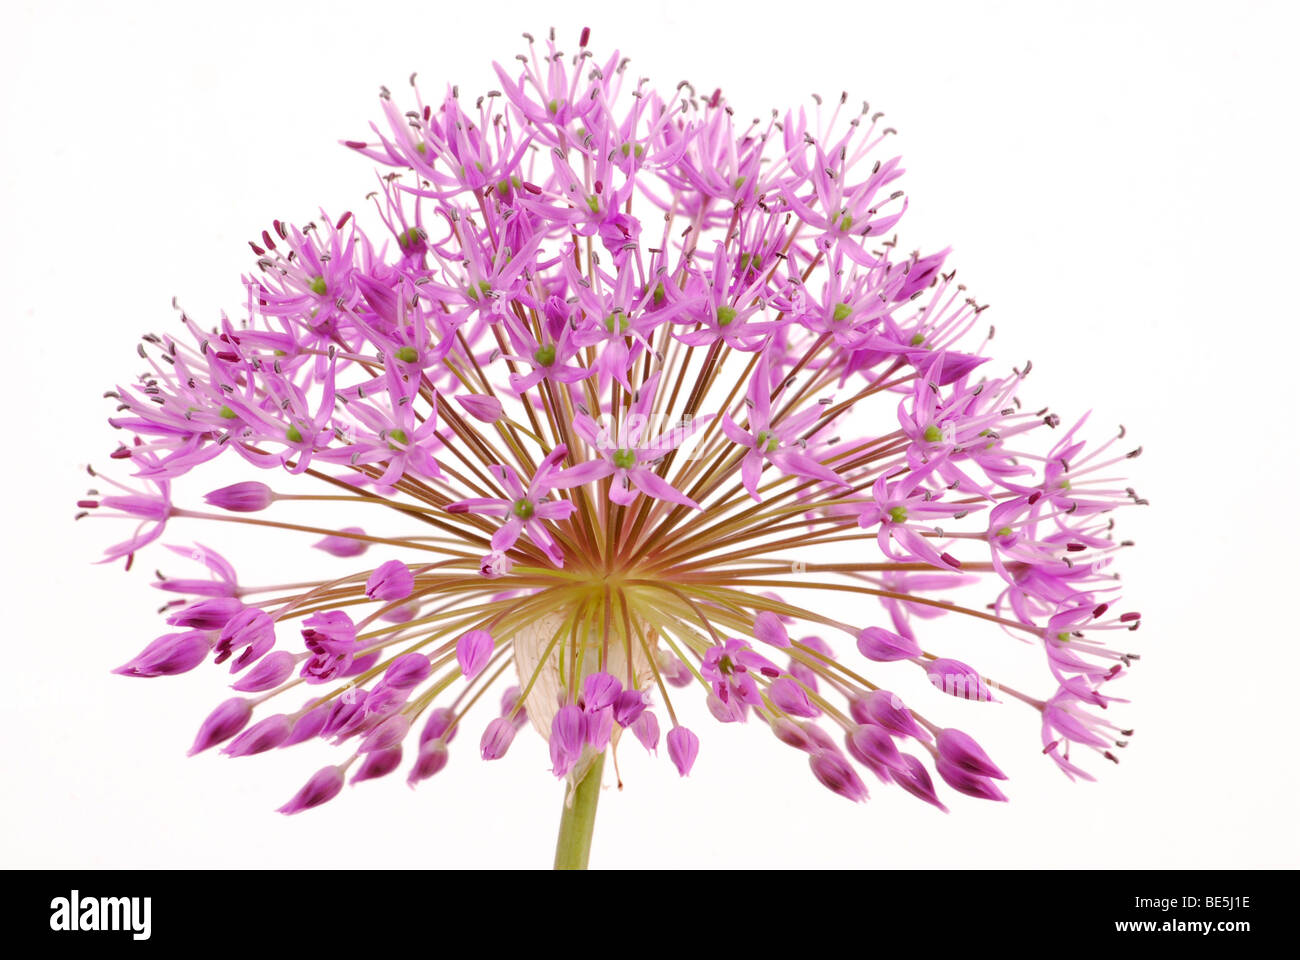 Decorative Allium flower head Stock Photo